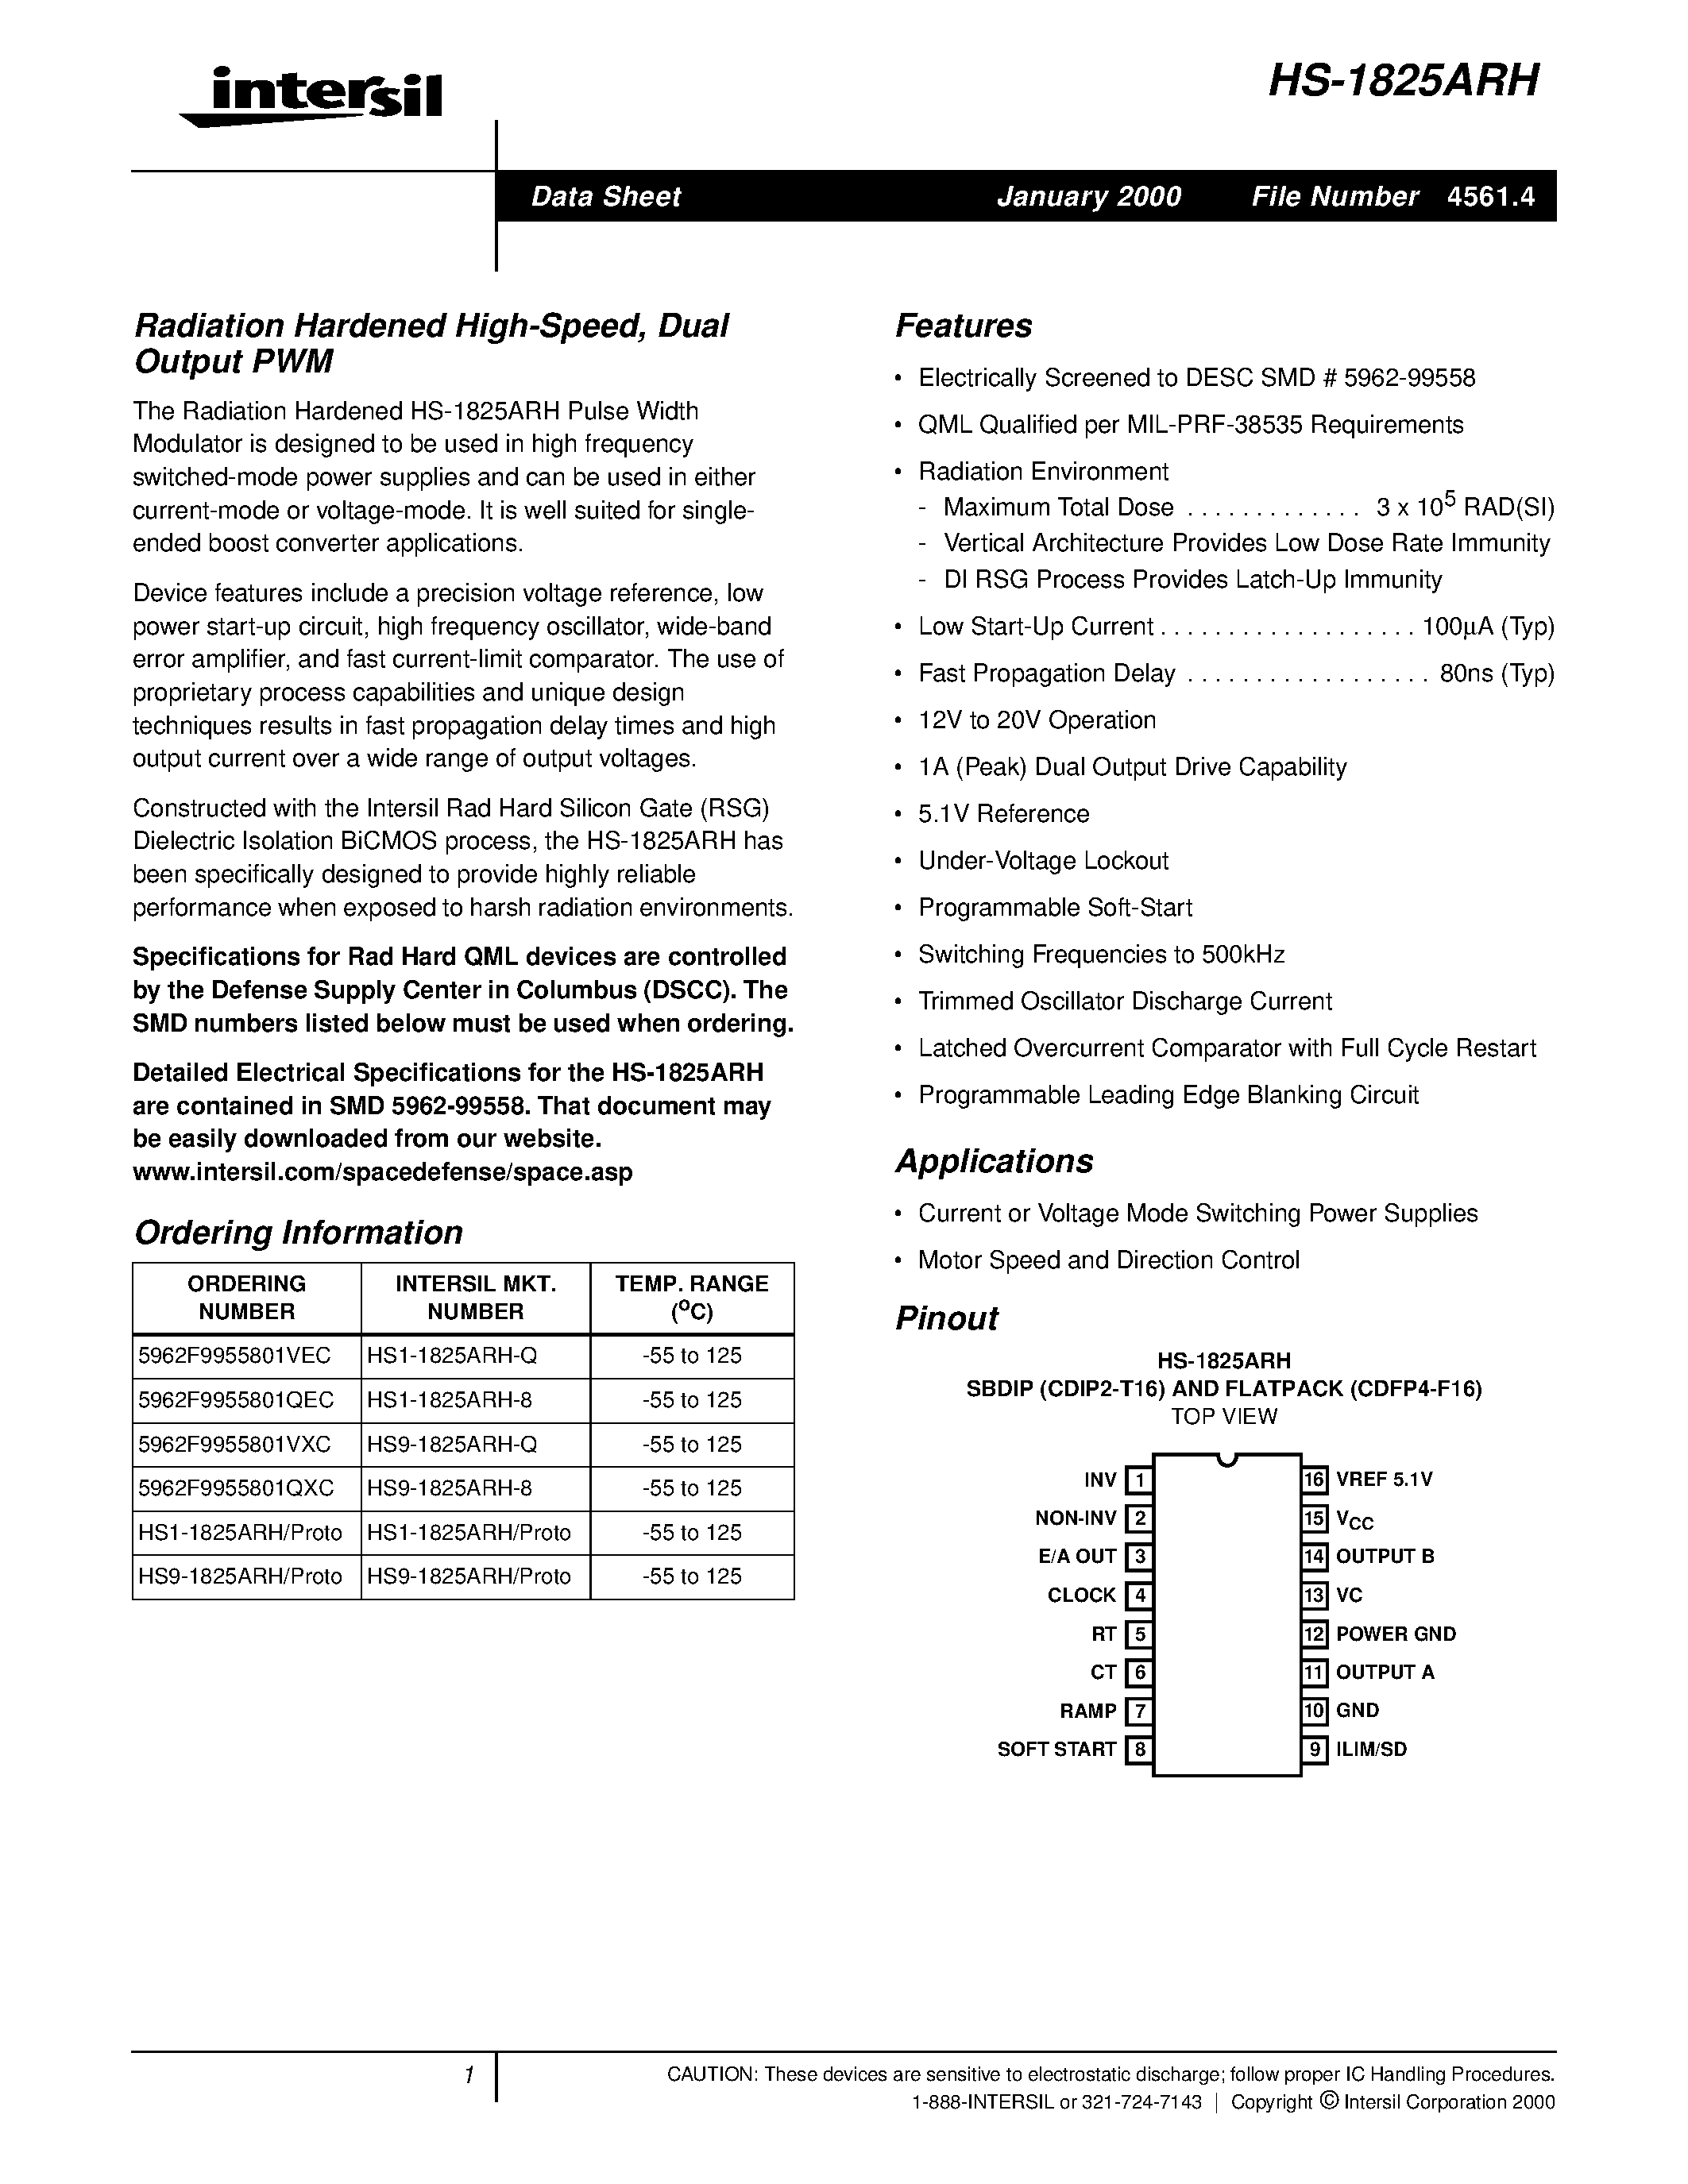 Datasheet HS9-1825ARH-Q - Radiation Hardened High-Speed/ Dual Output PWM page 1